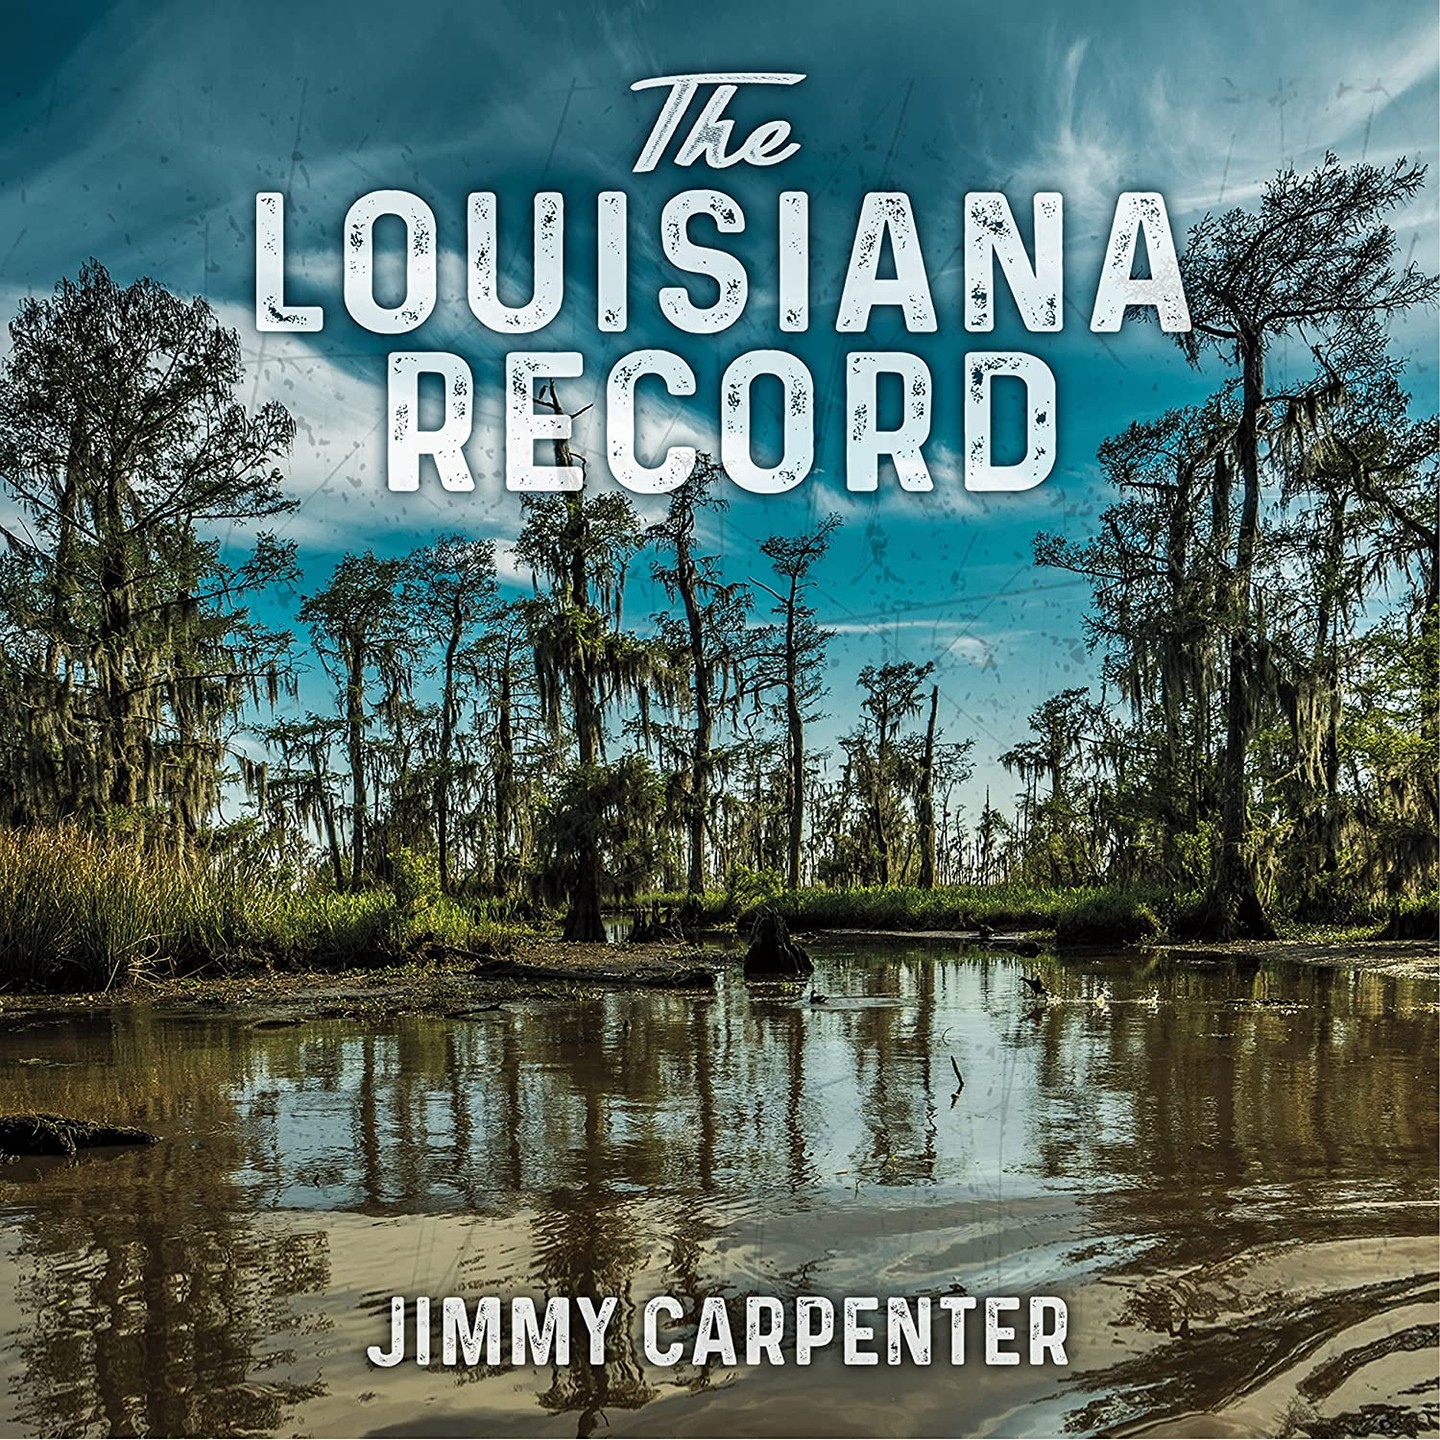 Review: Jimmy Carpenter – The Louisiana Record

Het nieuwe album van Jimmy Carpenter bevat heerlijke swingende rhythm & blues!

Gulf Coast Records Mike Zito Michelle Castiglia

https://www.bluestownmusic.nl/review-jimmy-carpenter-the-louisiana-record/

#JimmyCarpenter #MikeZito #blues #rhythmandblues #soul